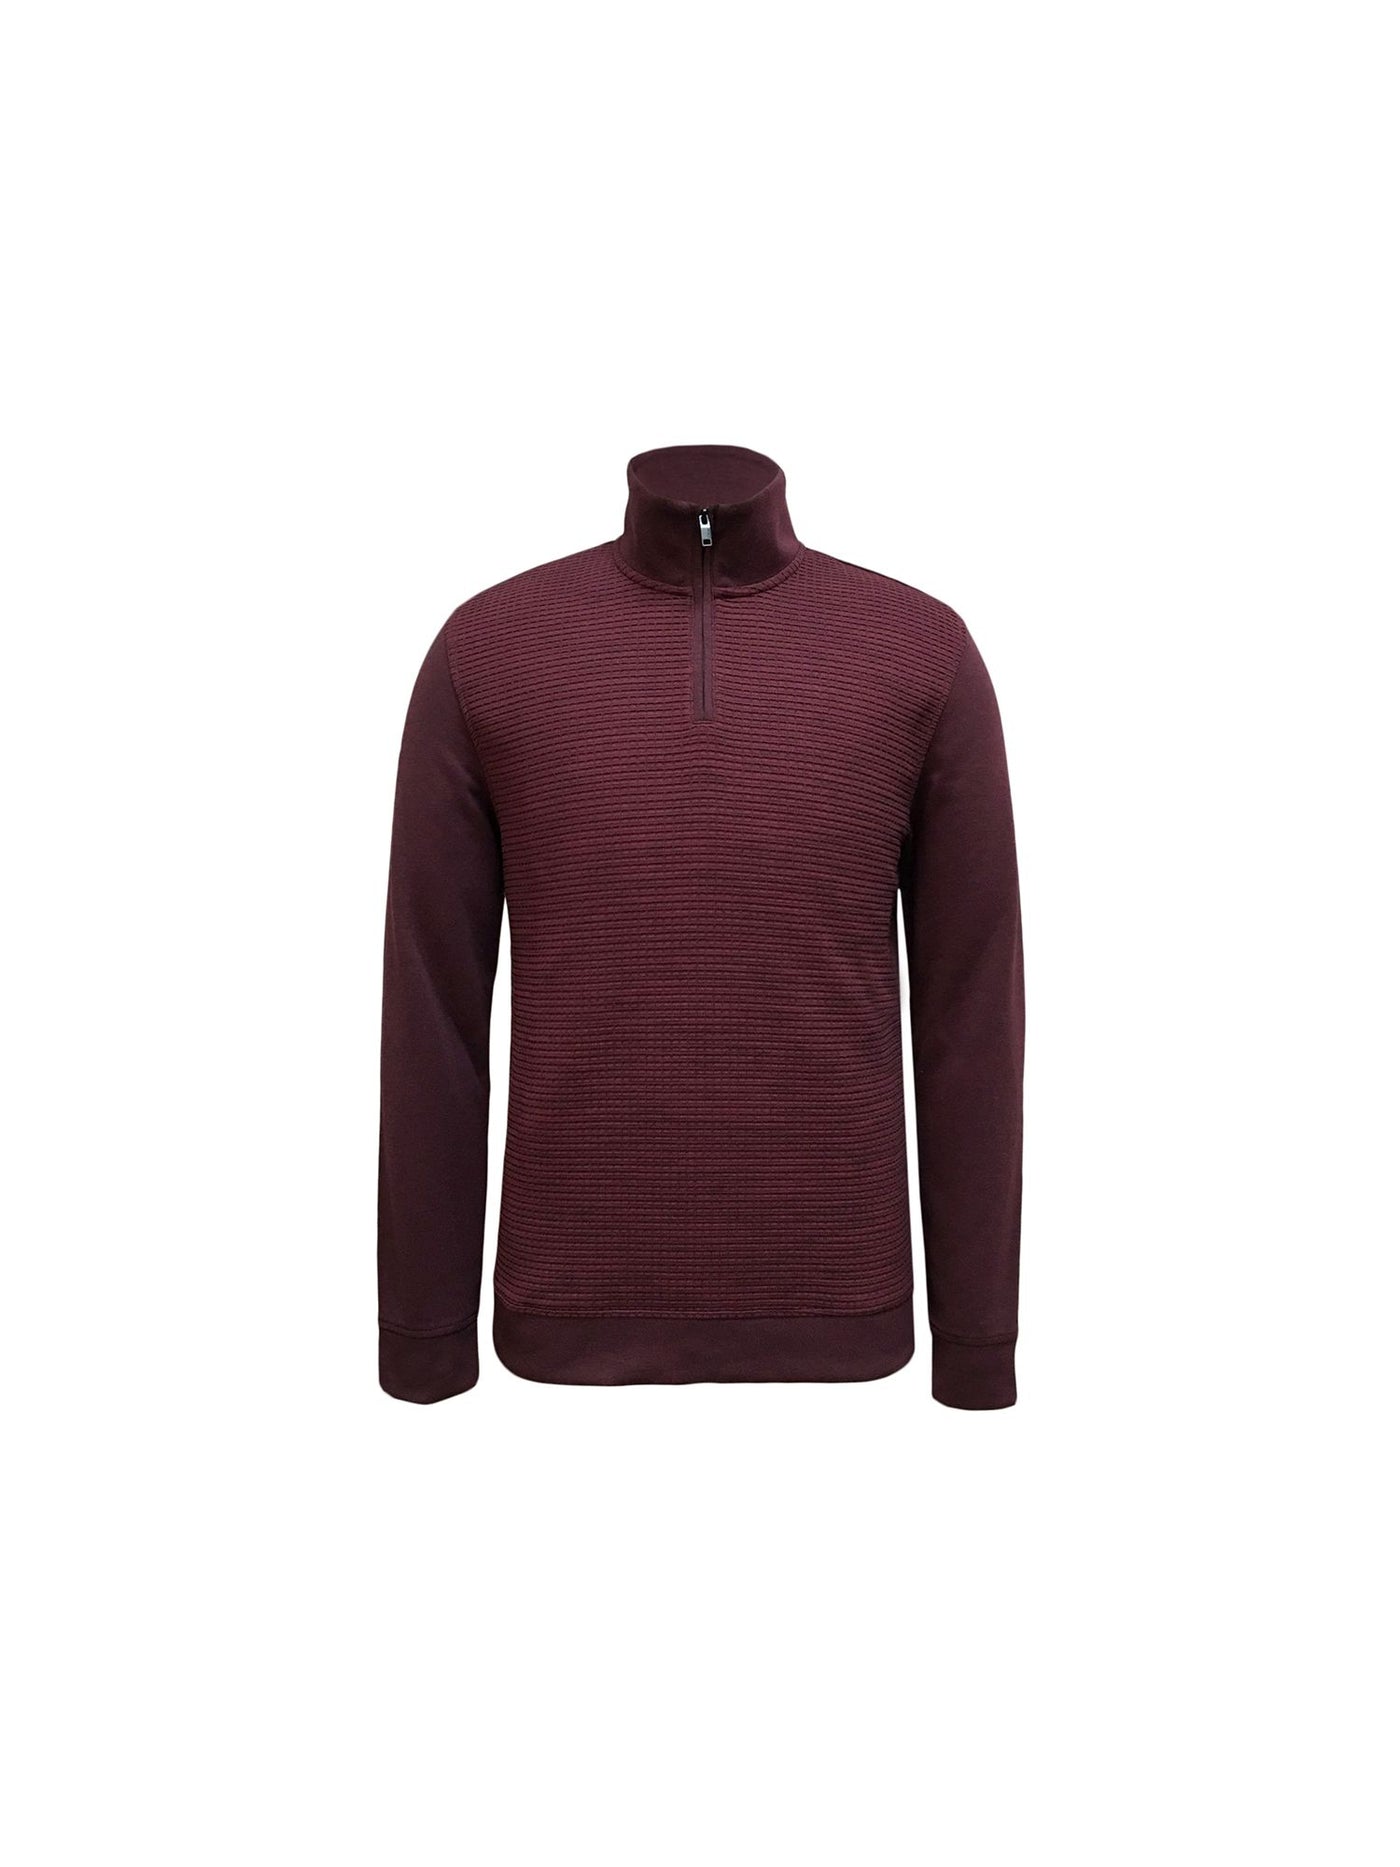 ALFANI Mens Burgundy Color Block Mock Classic Fit Quarter-Zip Cotton Blend Pullover Sweater XL